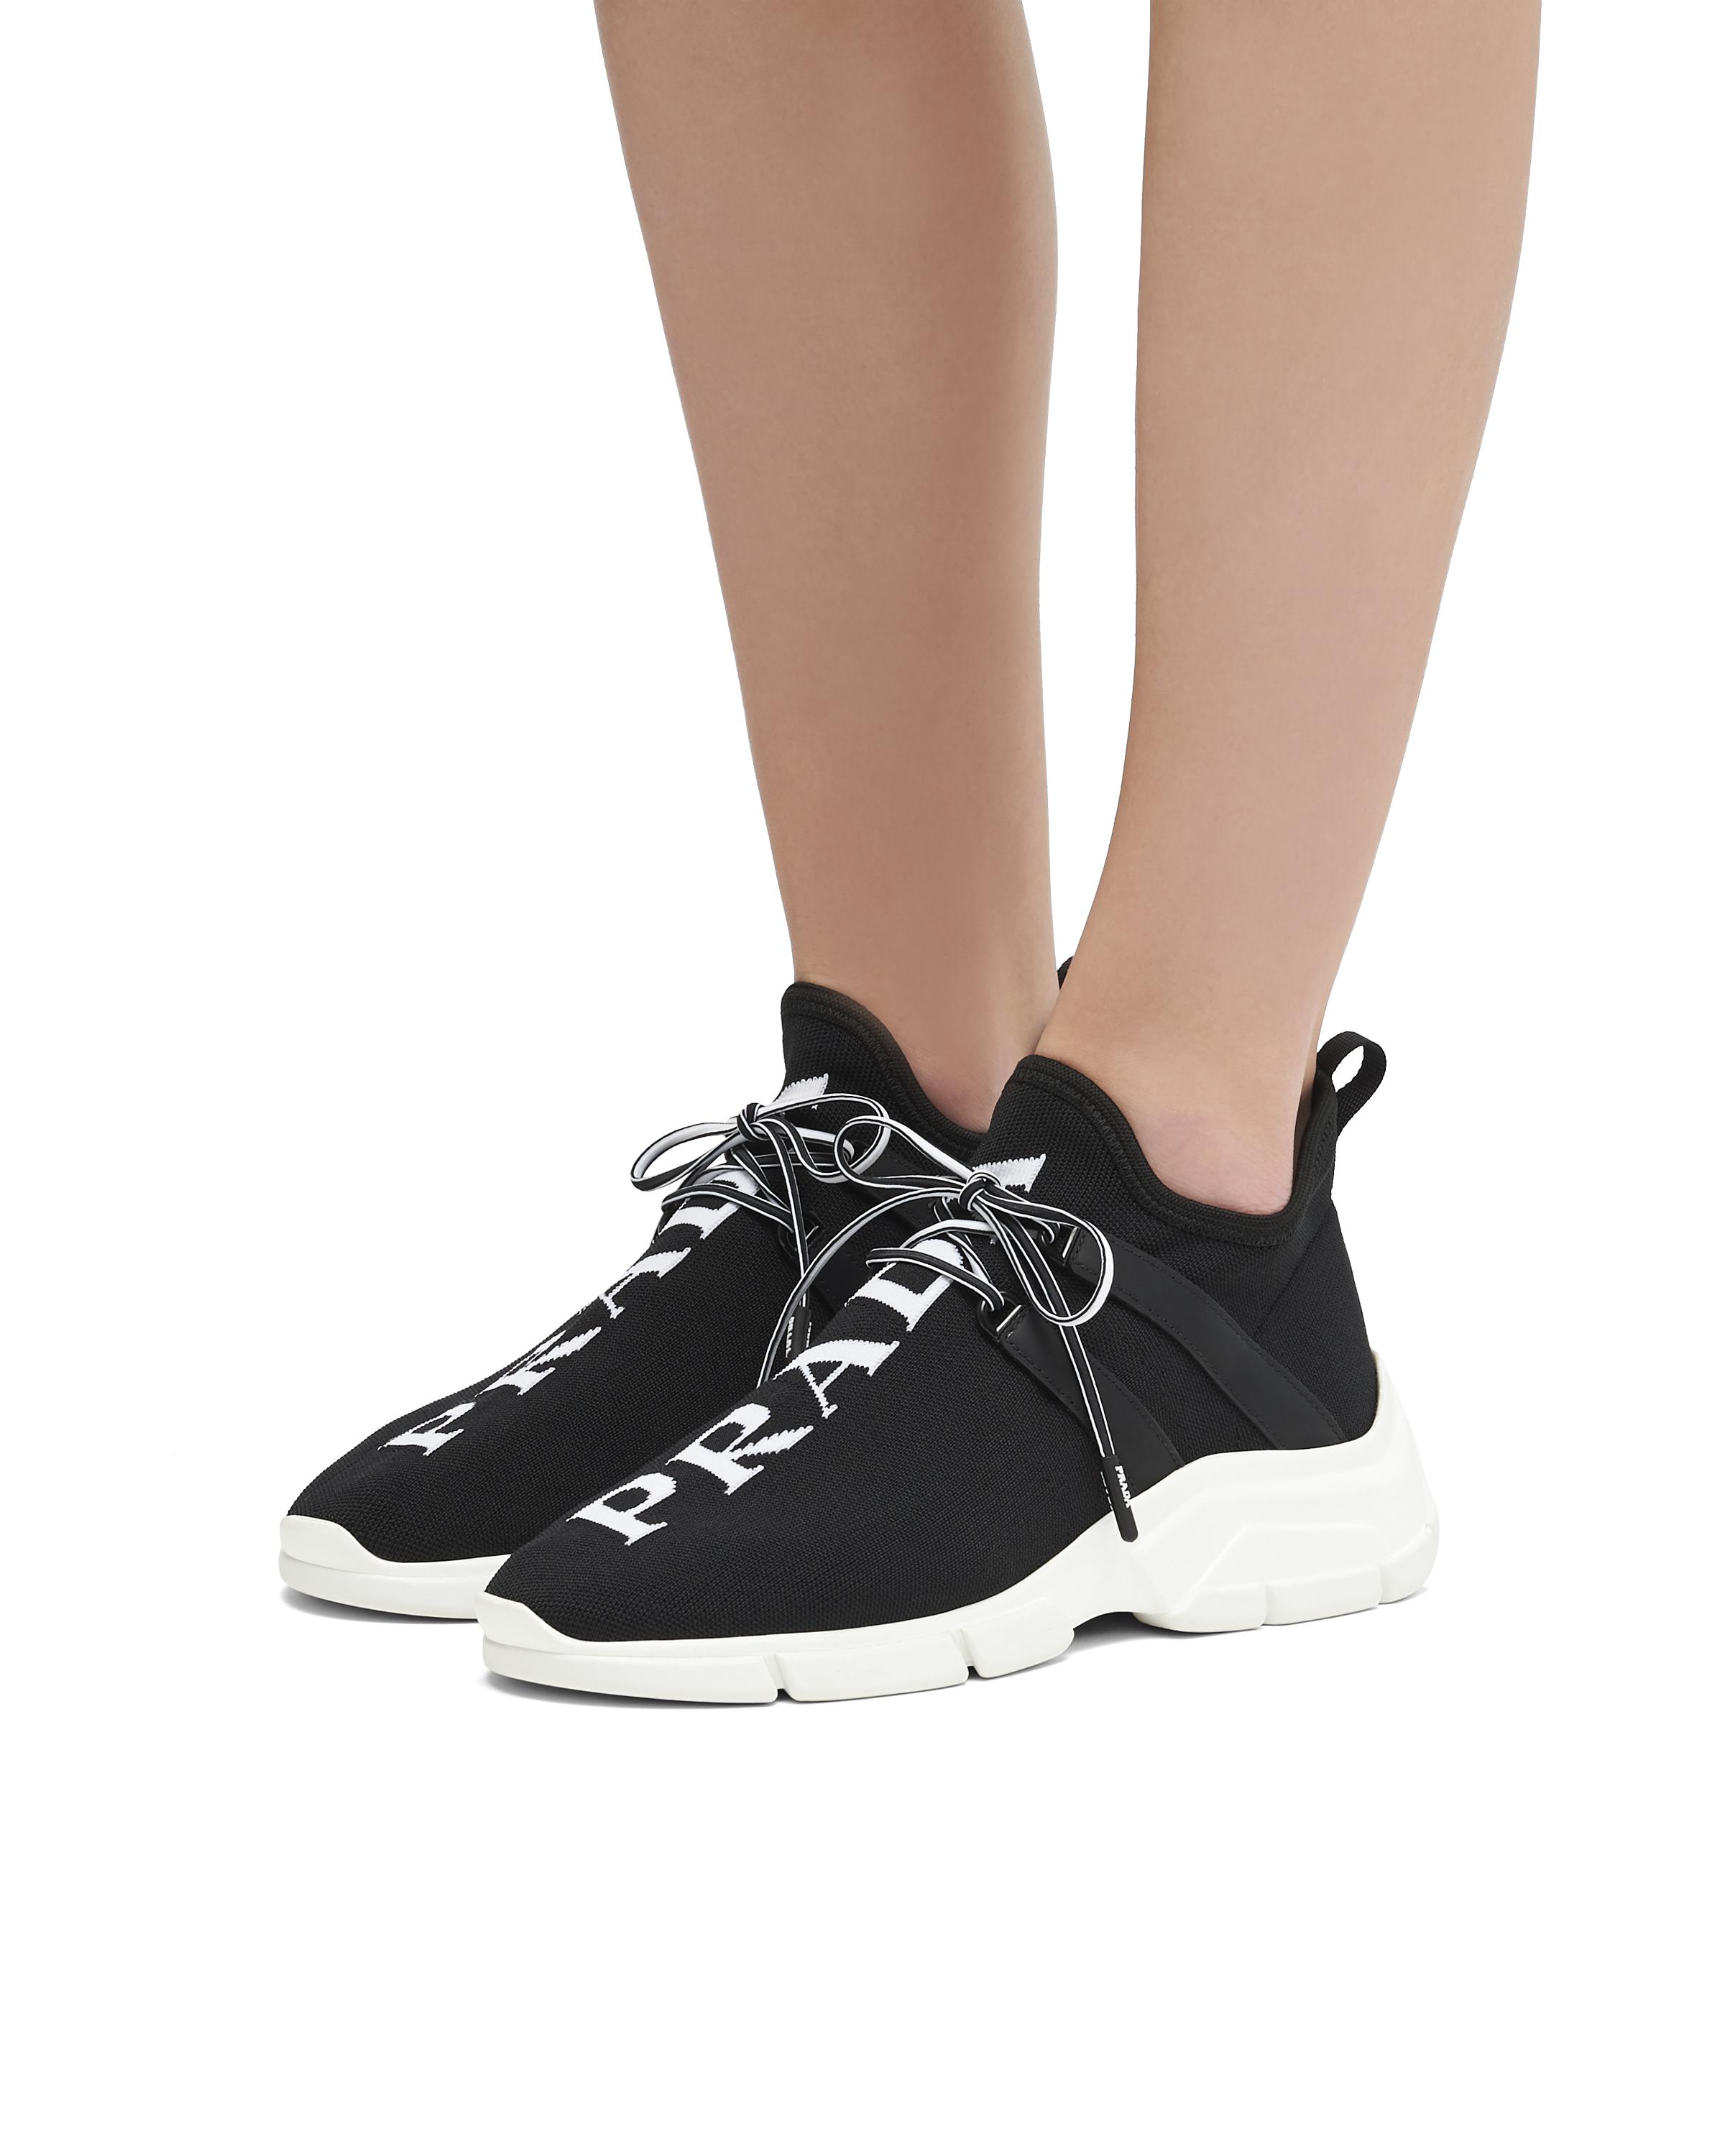 Prada Logo Knit Sneakers in Black - Save 67% | Lyst